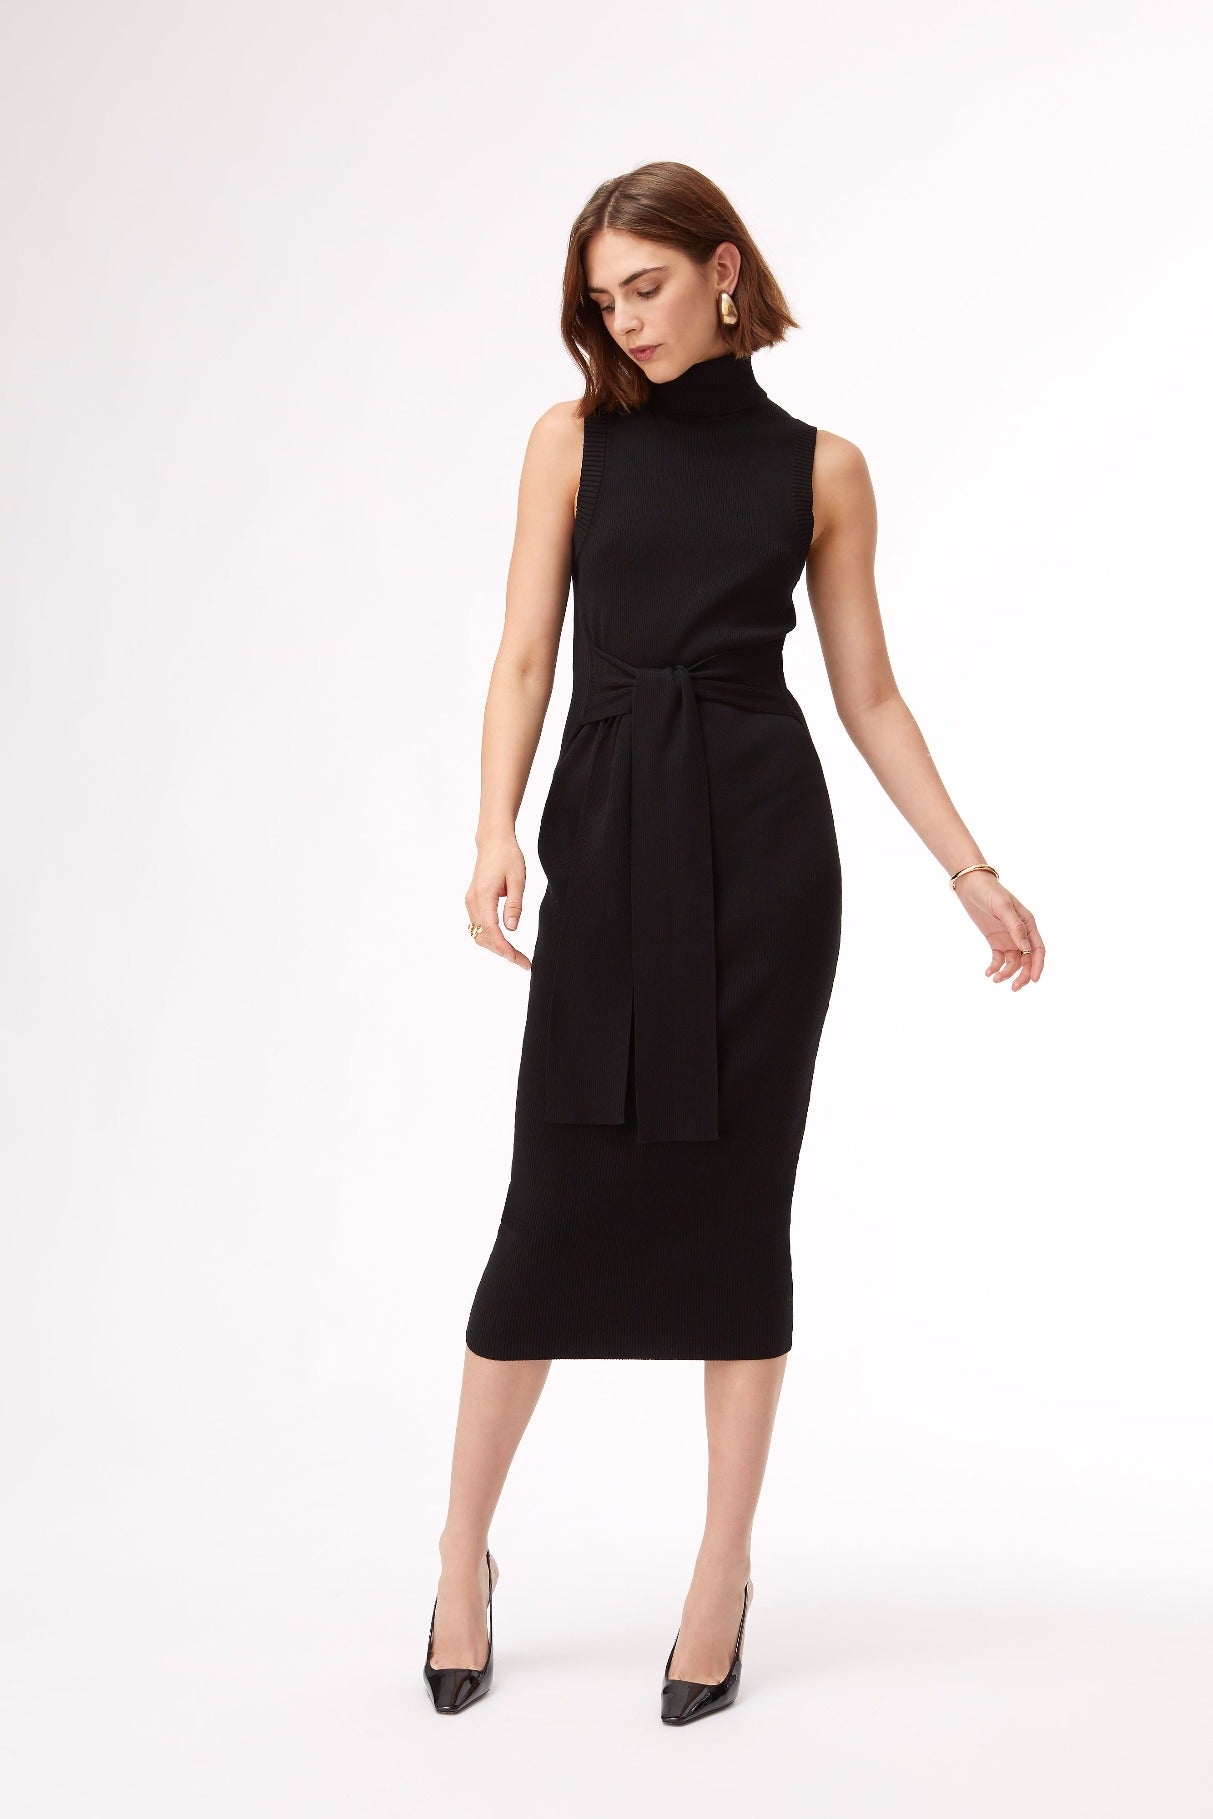 Black rowan knit tie front turtleneck neck midi dress - figure flattering designer fashion work appropriate dresses for women